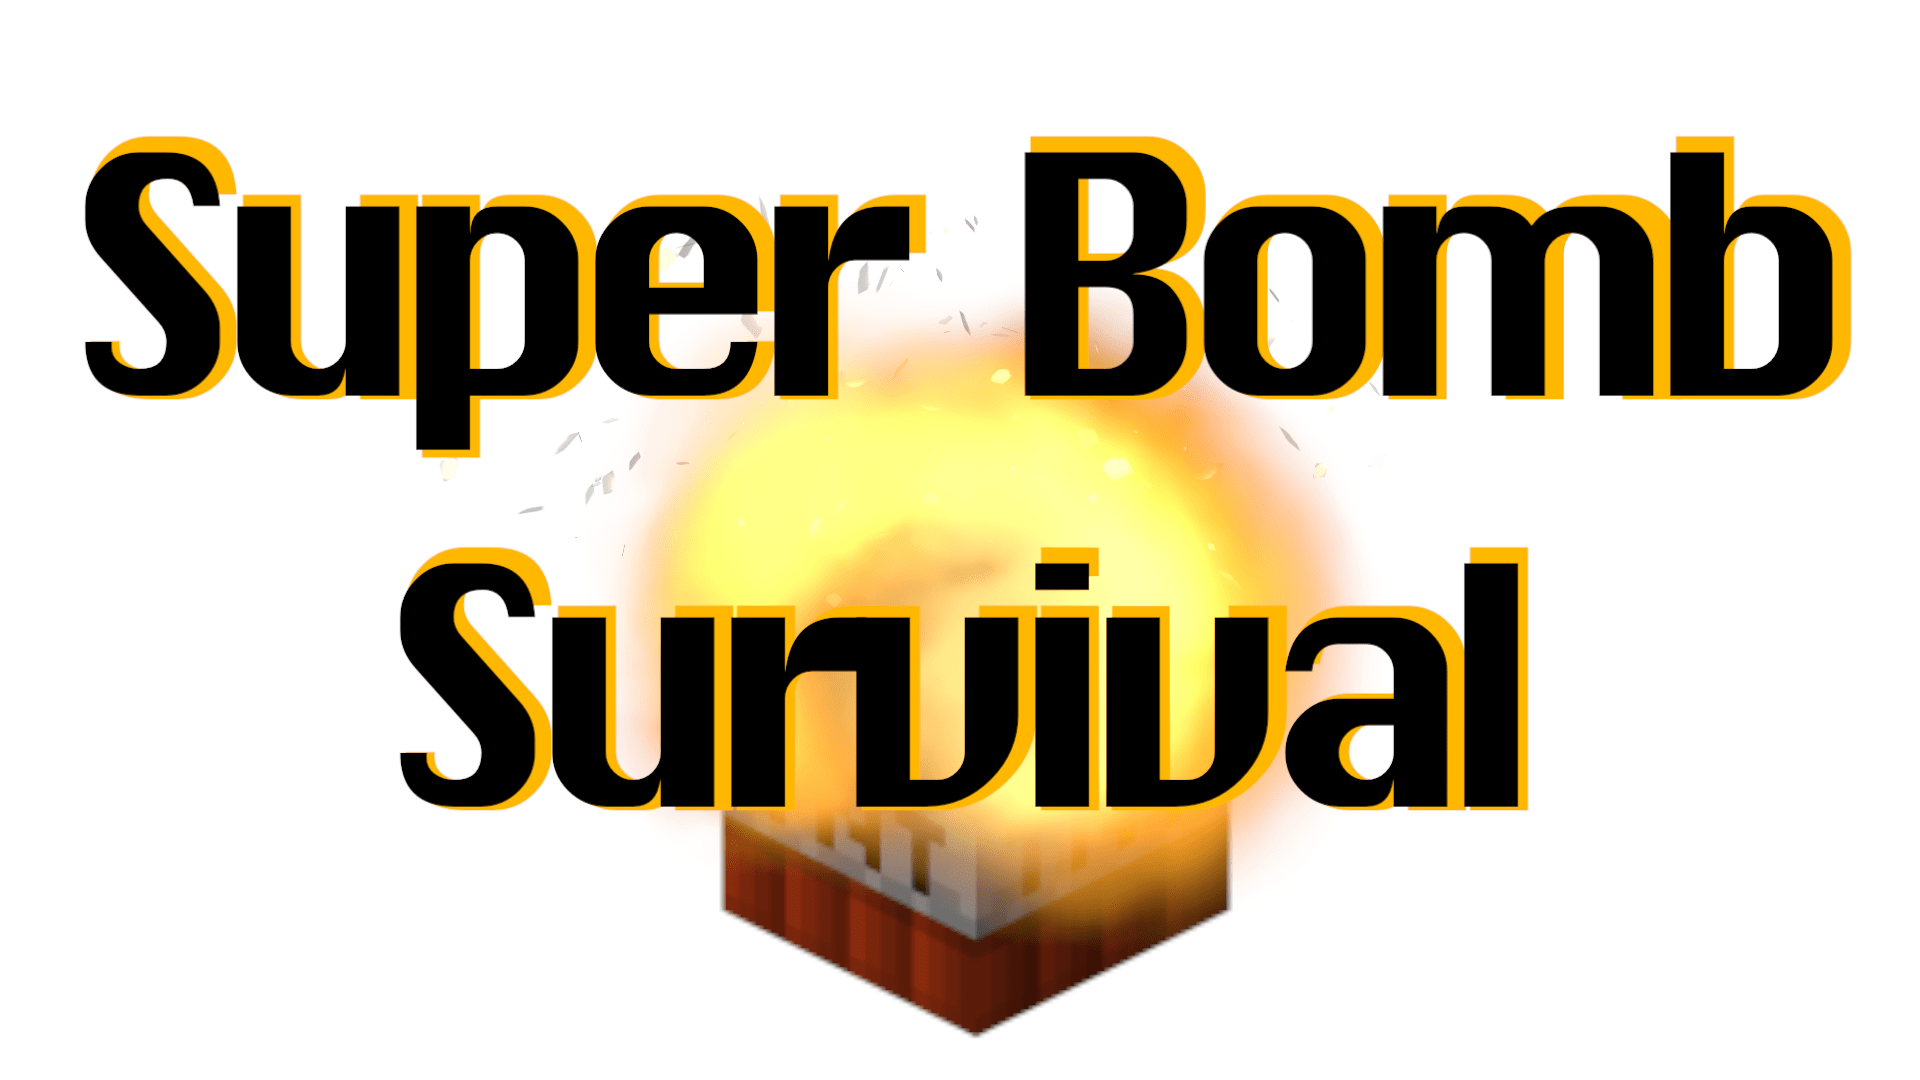 Super Bomb Survival - super bomb survival roblox super bomb survival